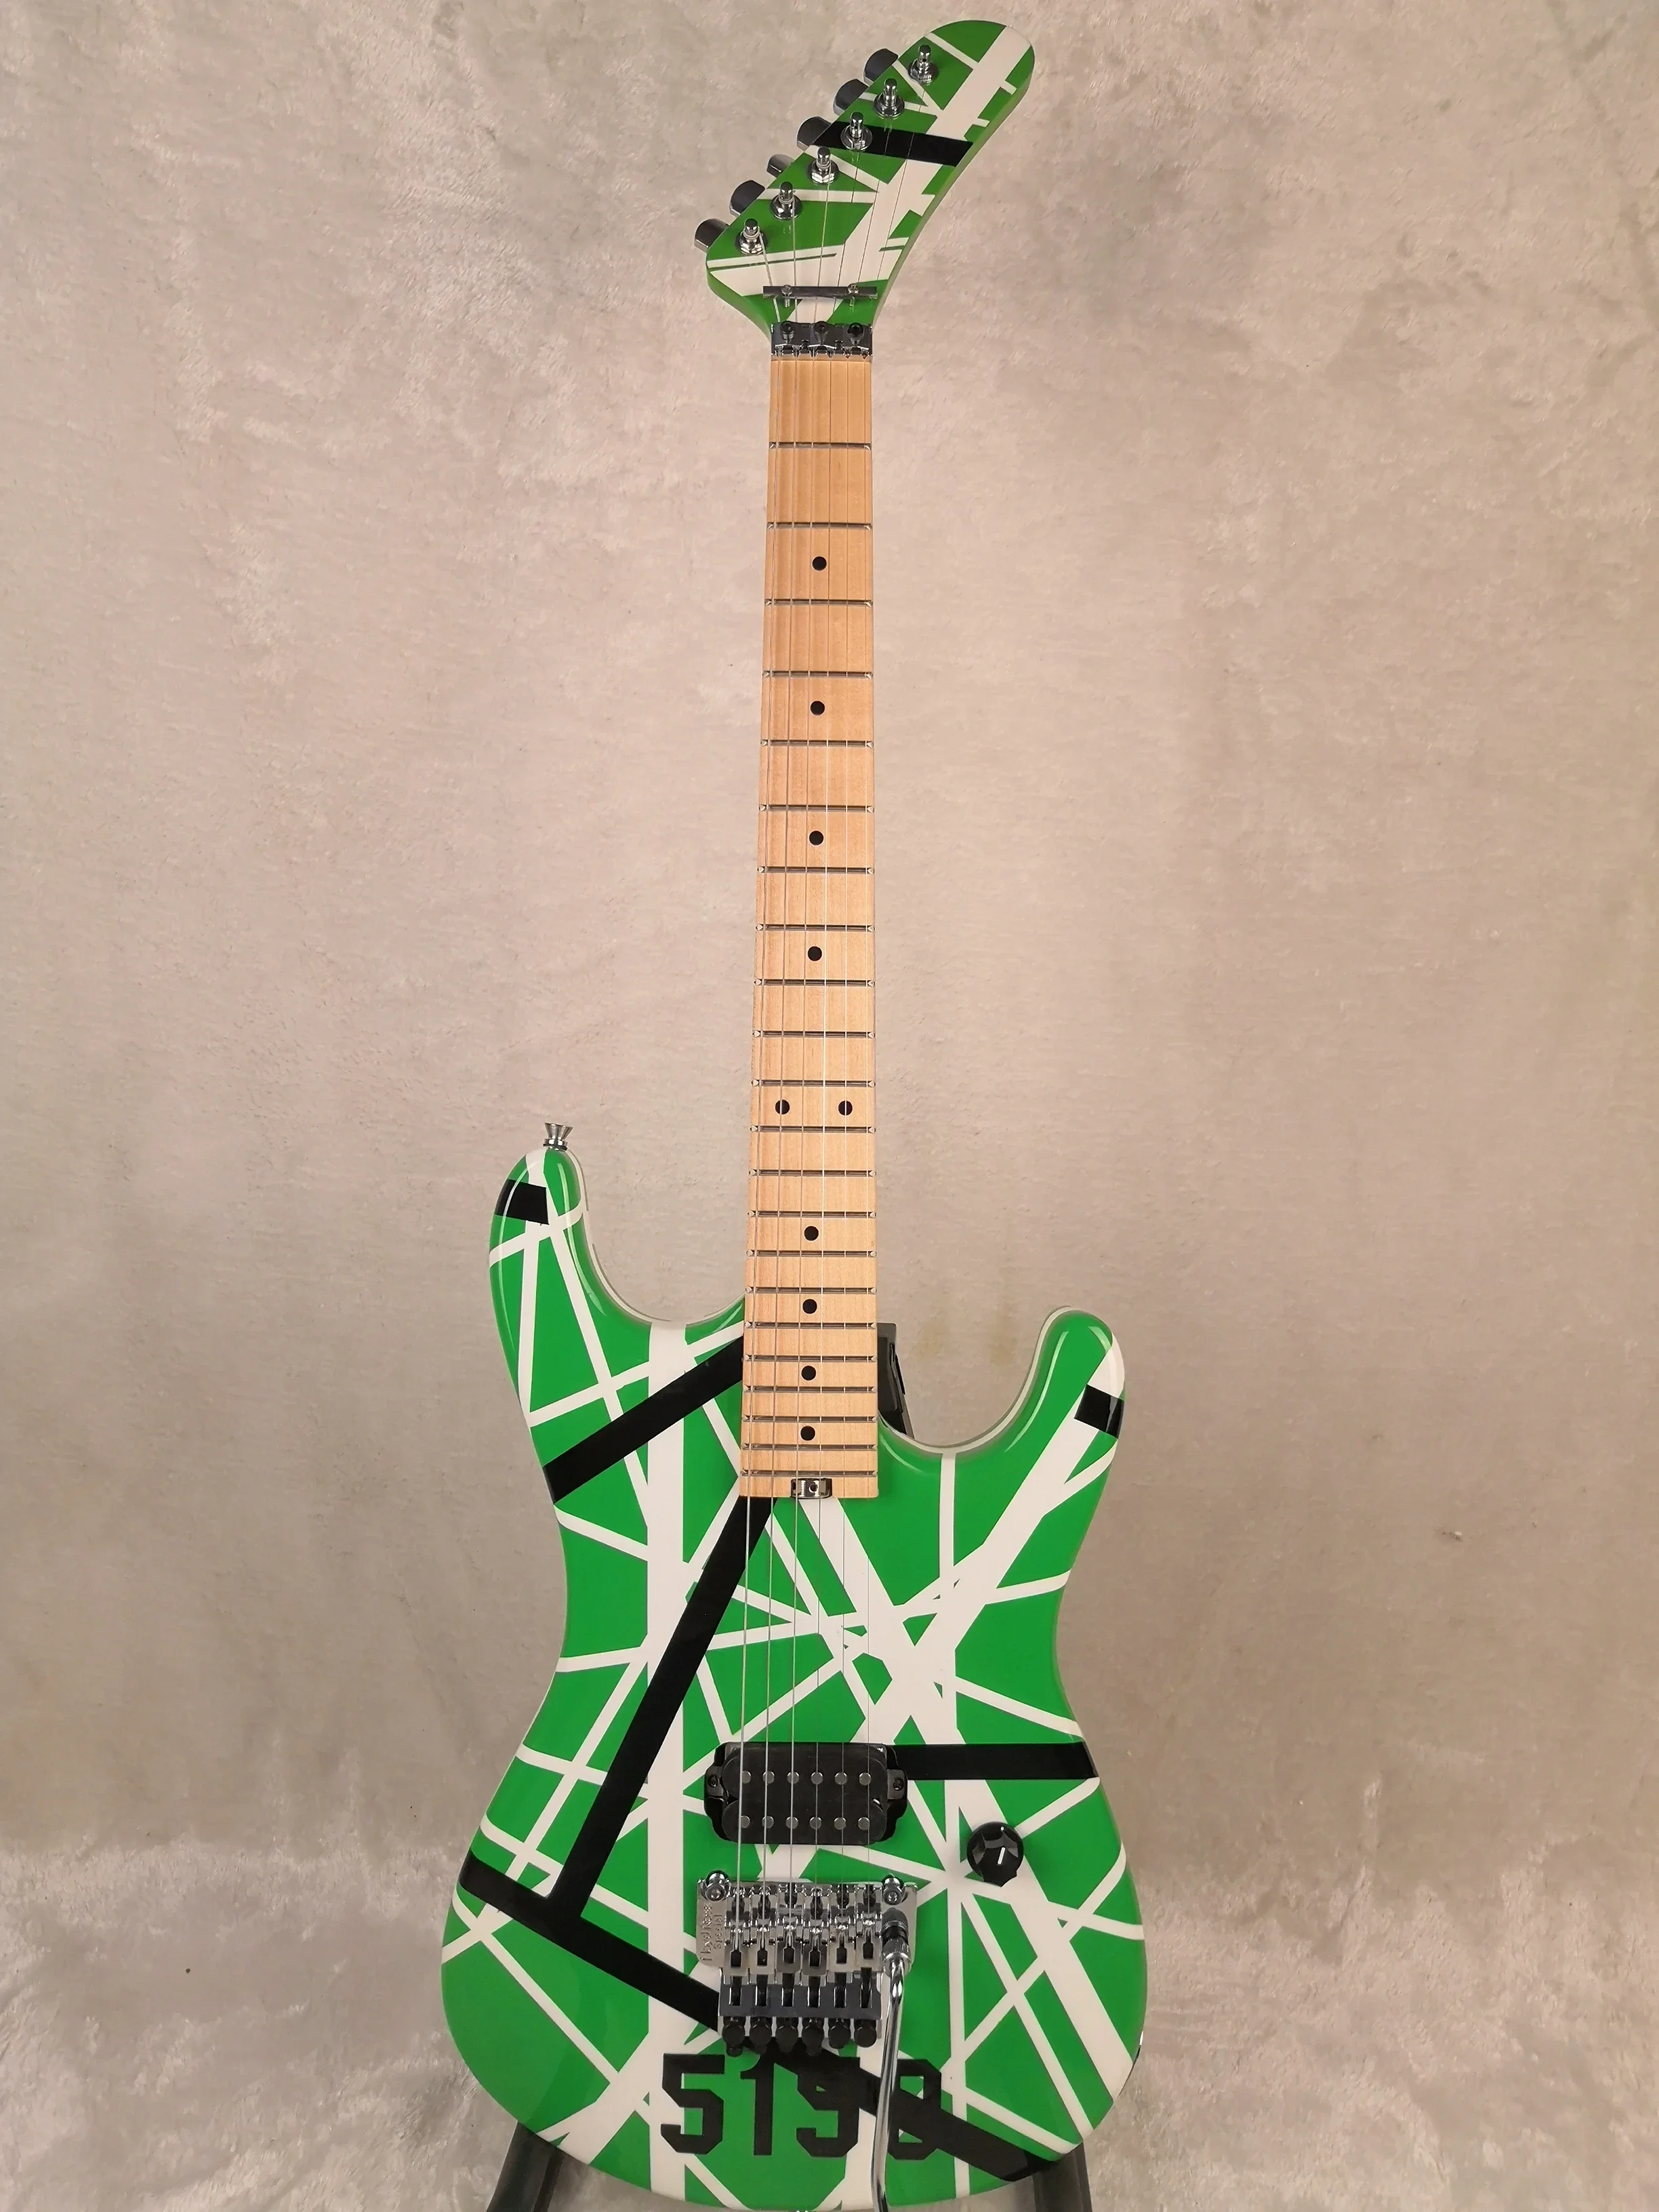 

Kramer Эдвард Ван Хена 5150 белая черная полоса зеленая электрическая гитара Floyd Rose Tremolo Tailpiece, Стопорная гайка, Whammy Bar